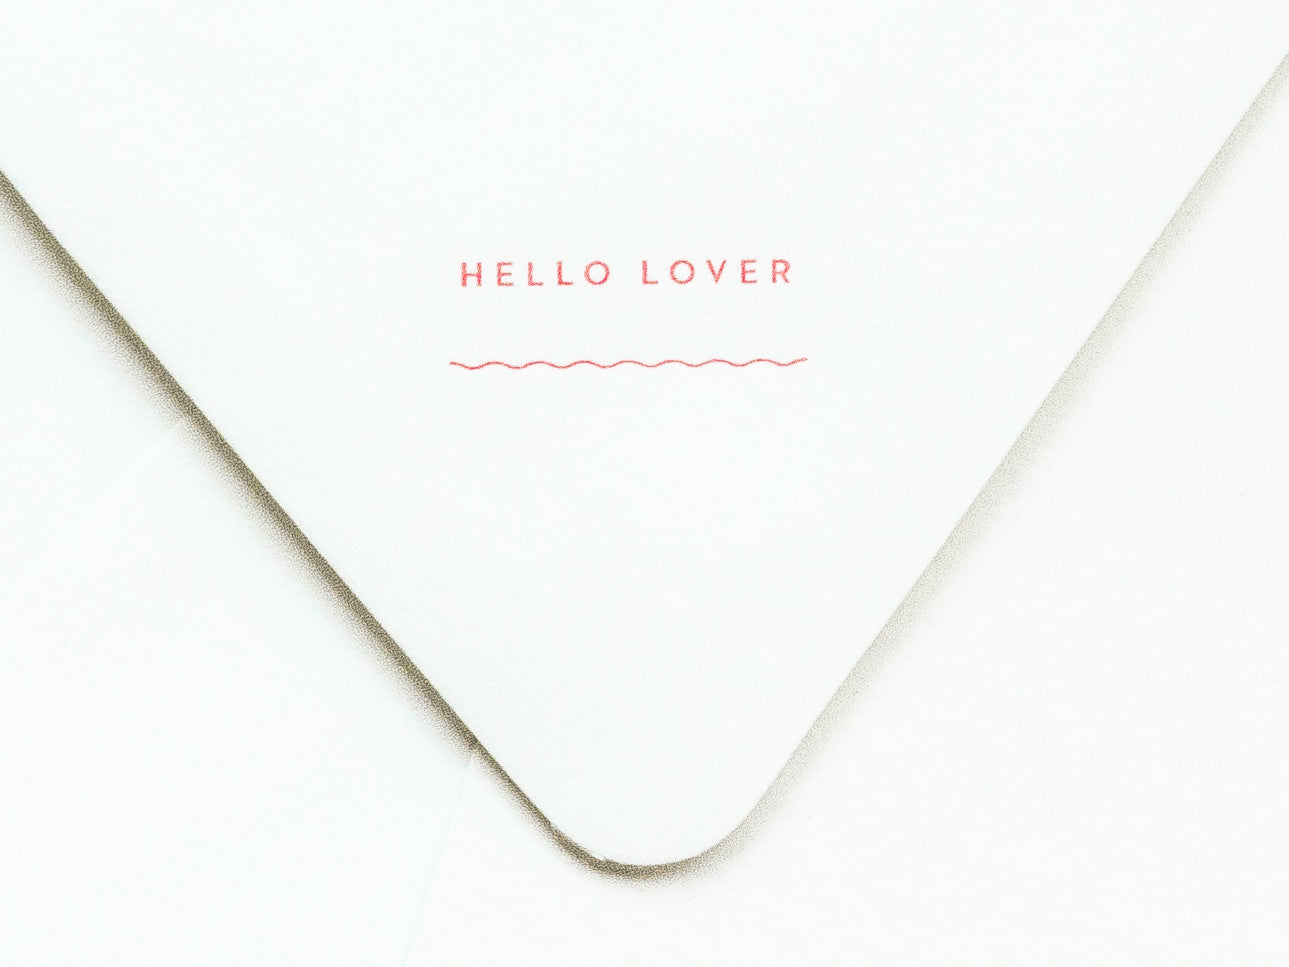 Hello Lover Notevelope & Bra or Briefs Notecard